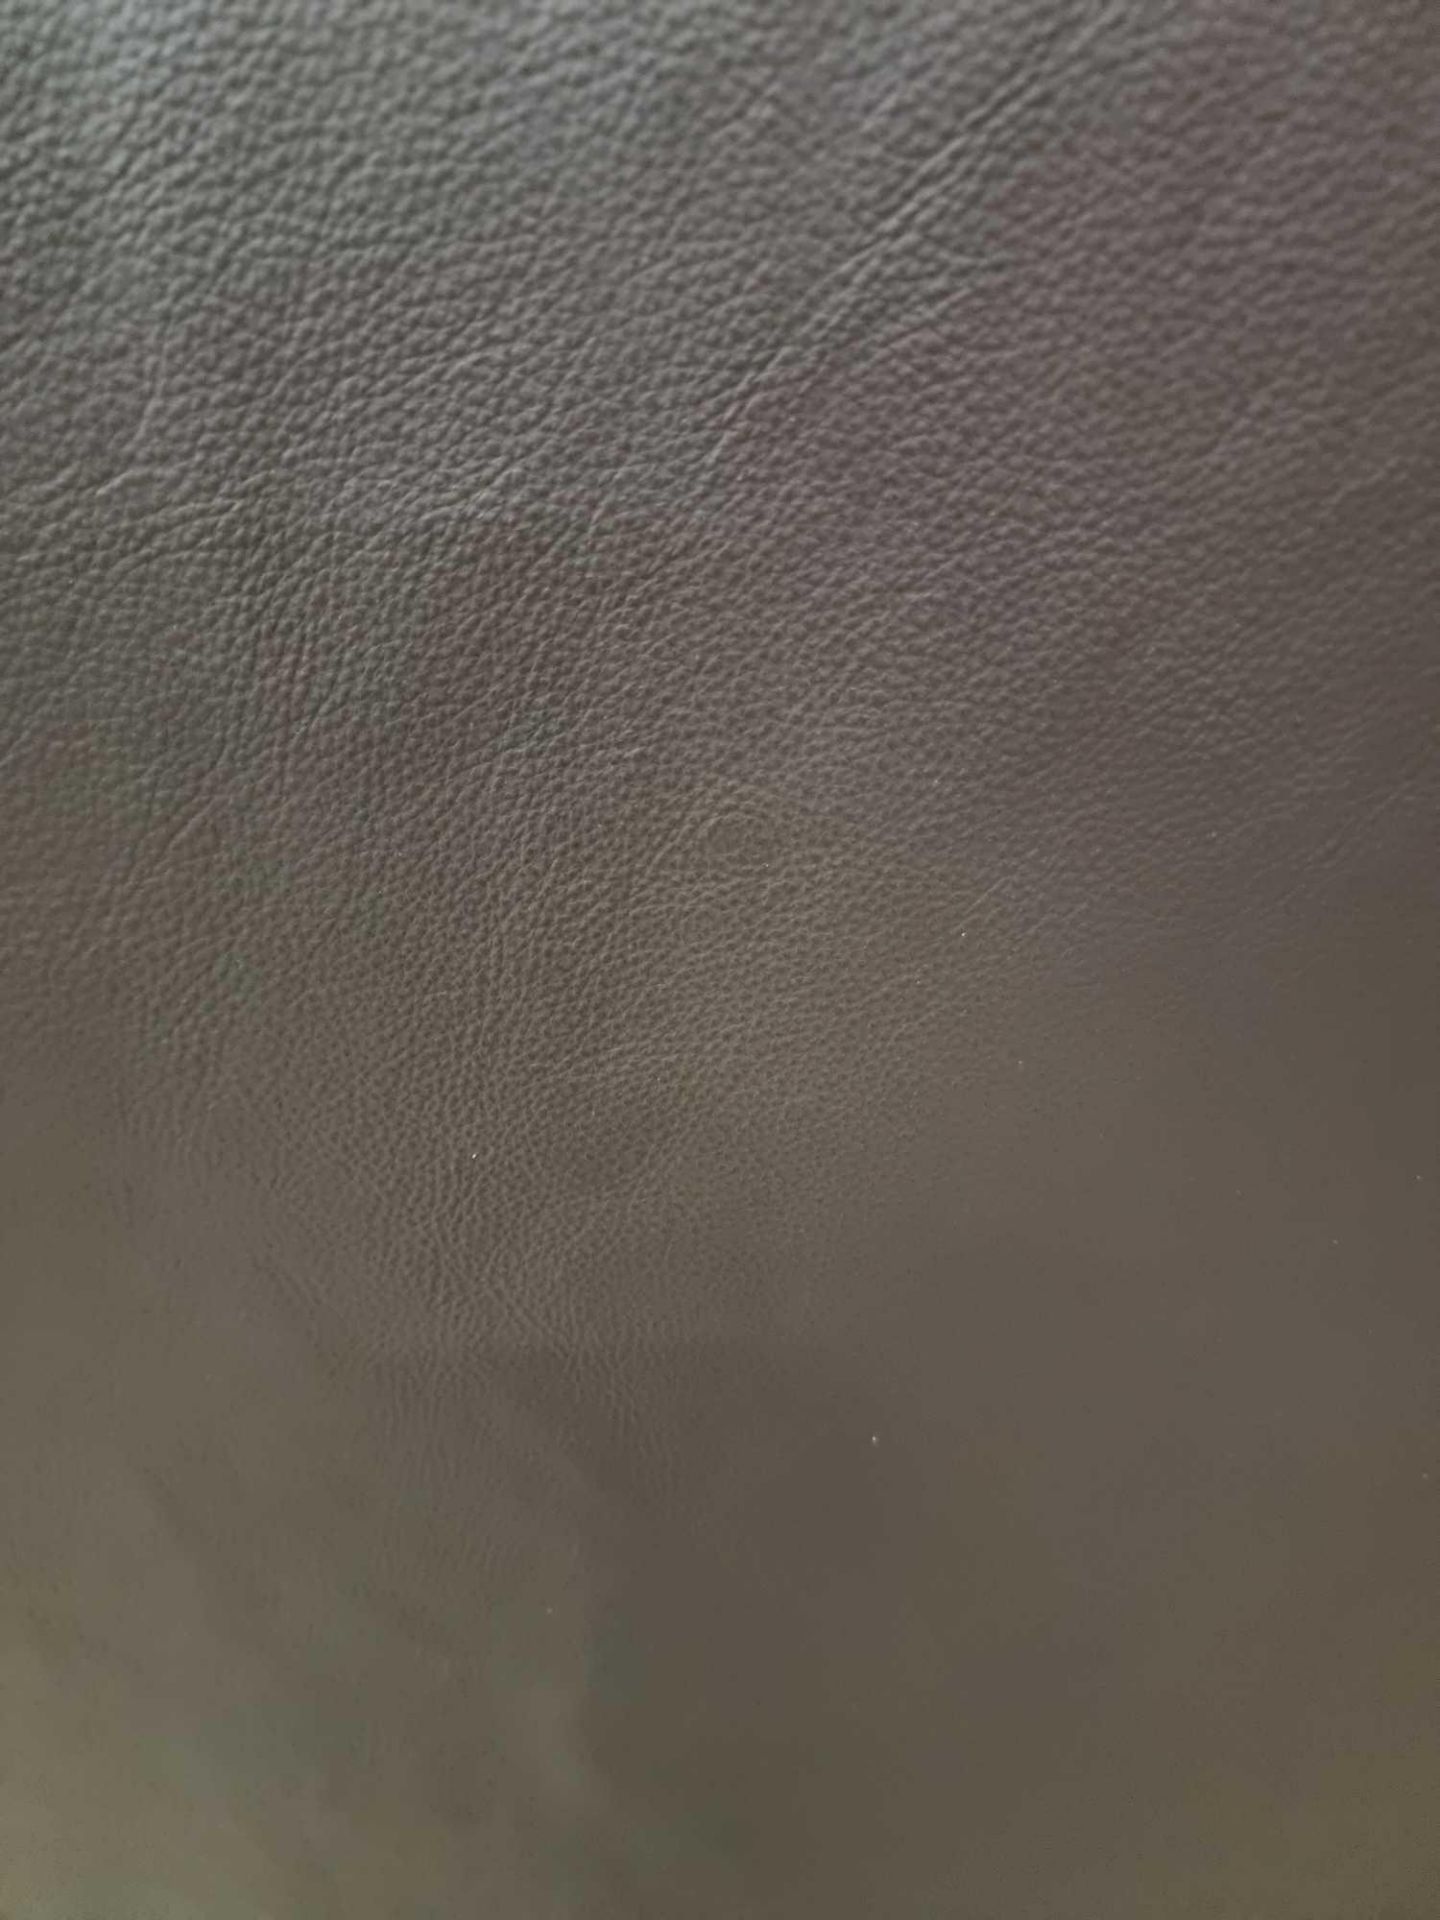 Yarwood Hammersmith Chocolate Leather Hide approximately 3.84mÂ² 2.4 x 1.6cm - Image 2 of 2